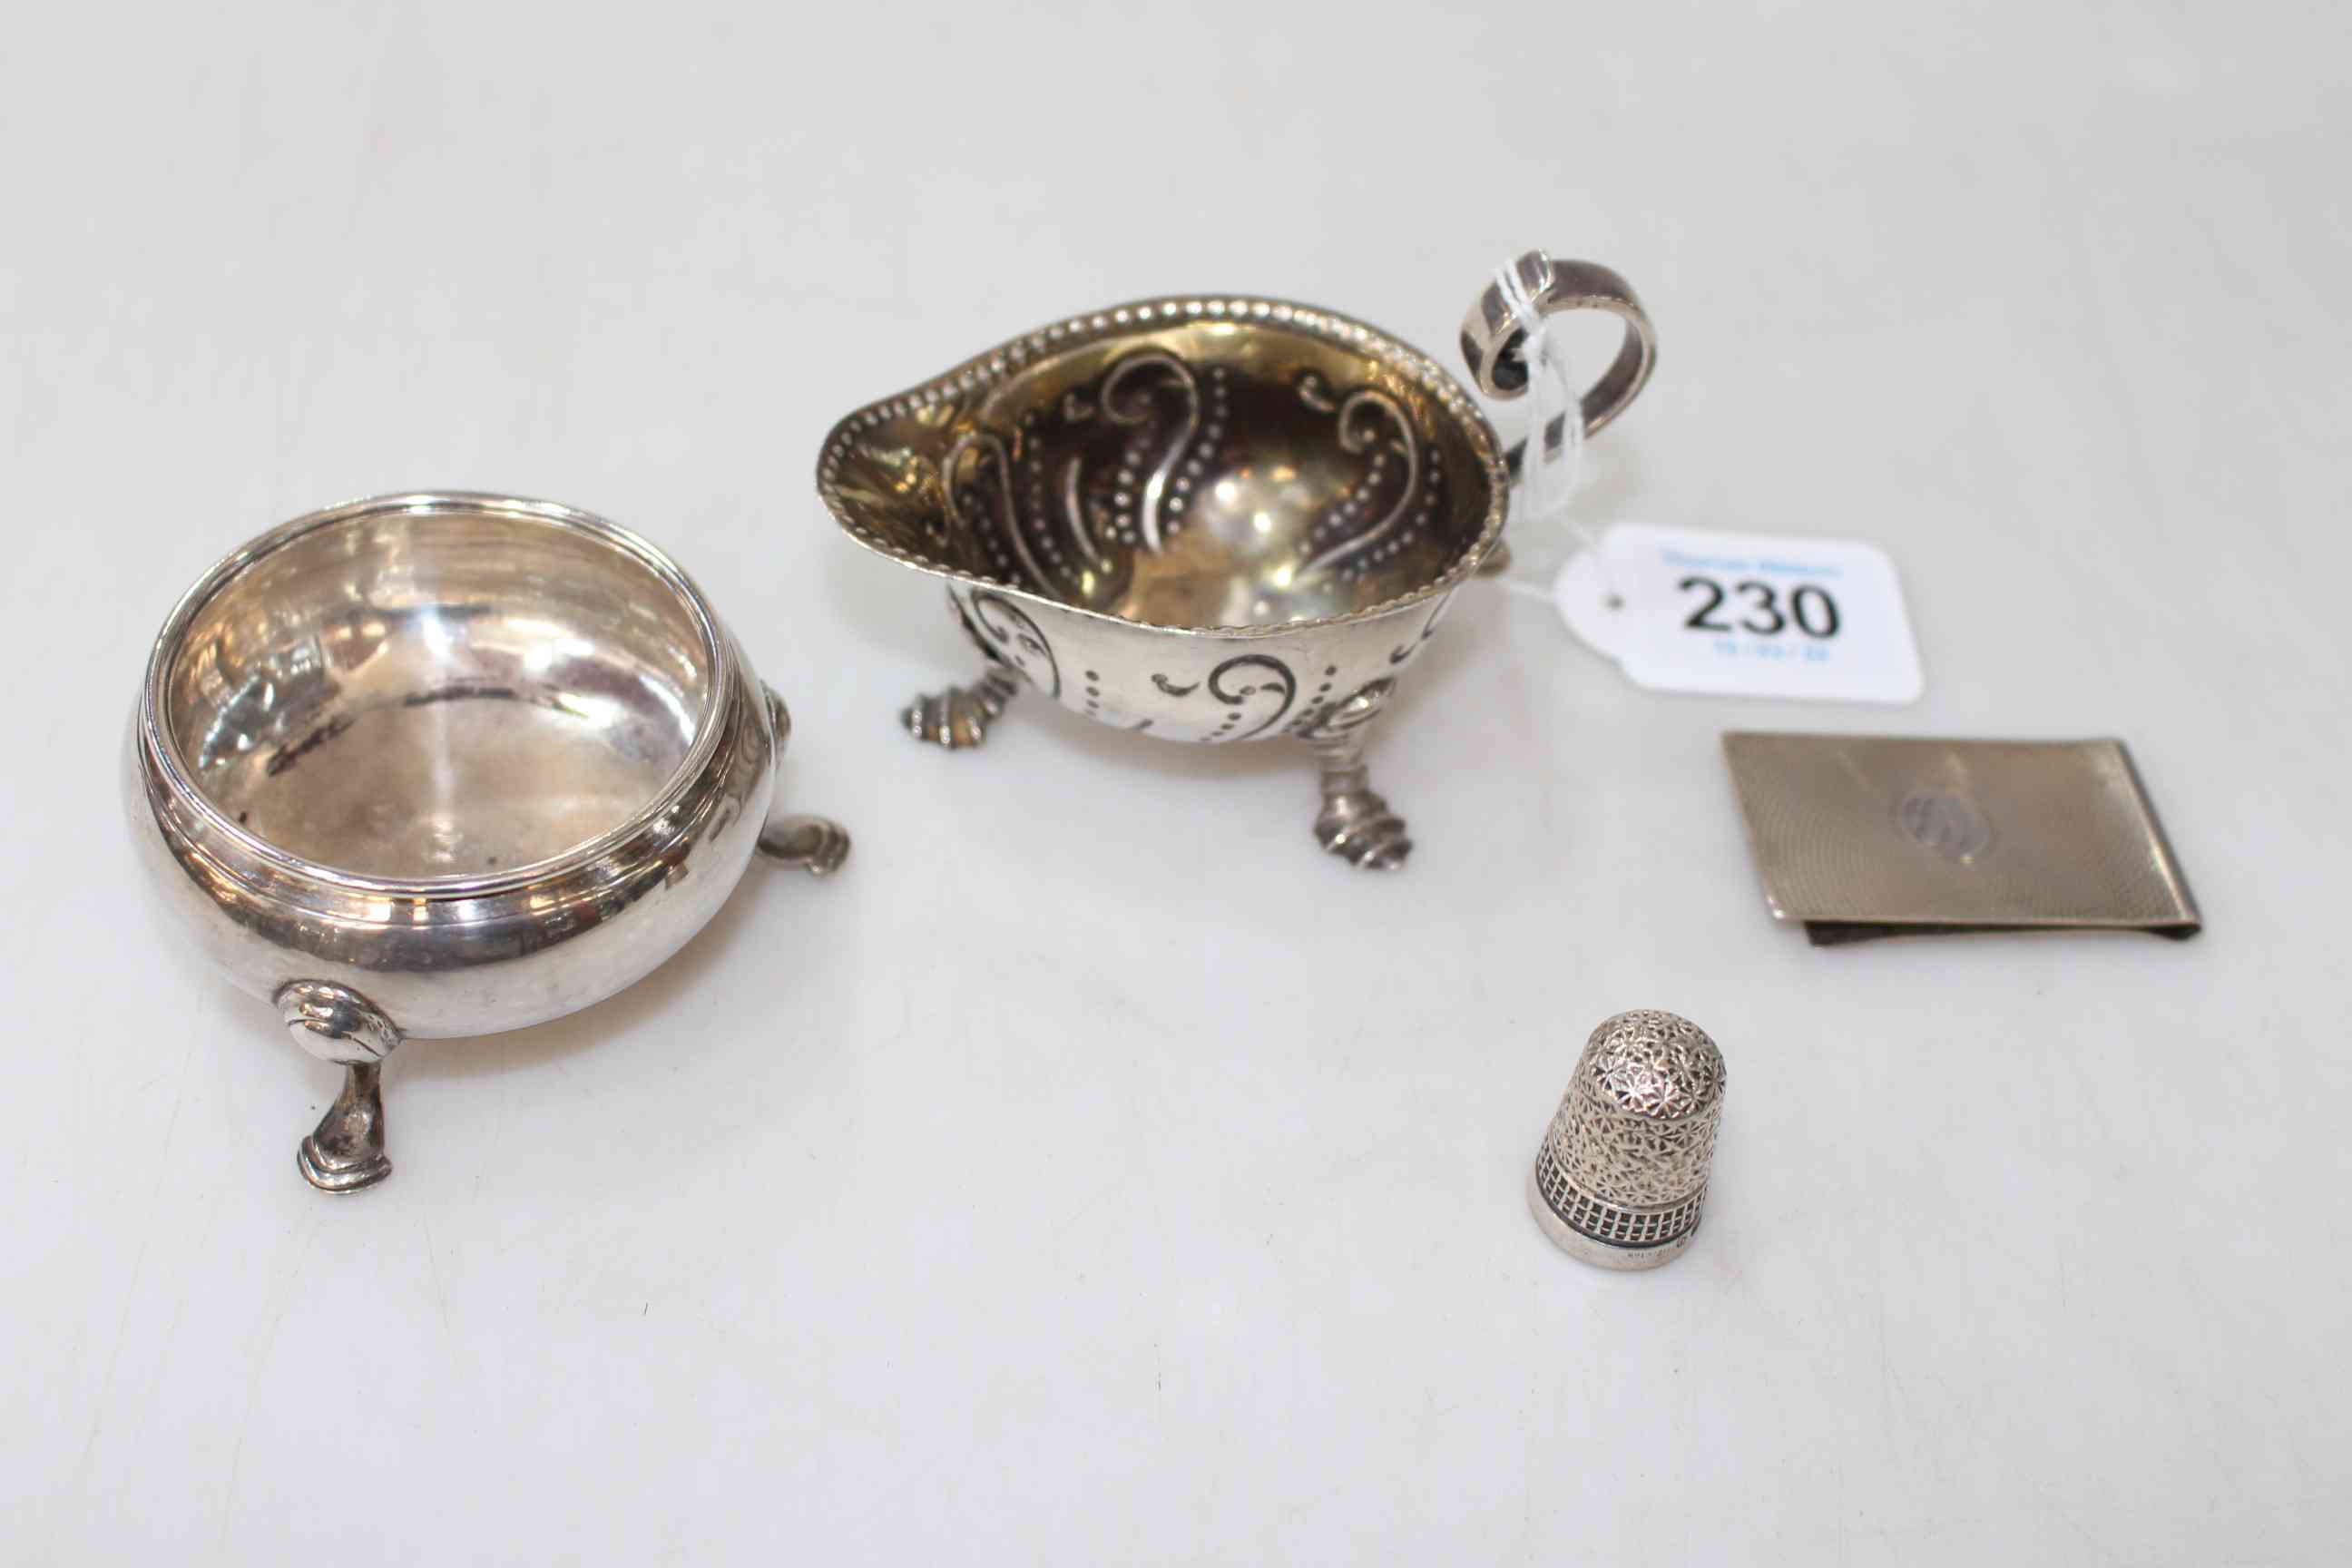 George III silver cauldron salt, small silver jug, engine turned money clip, and thimble (4).